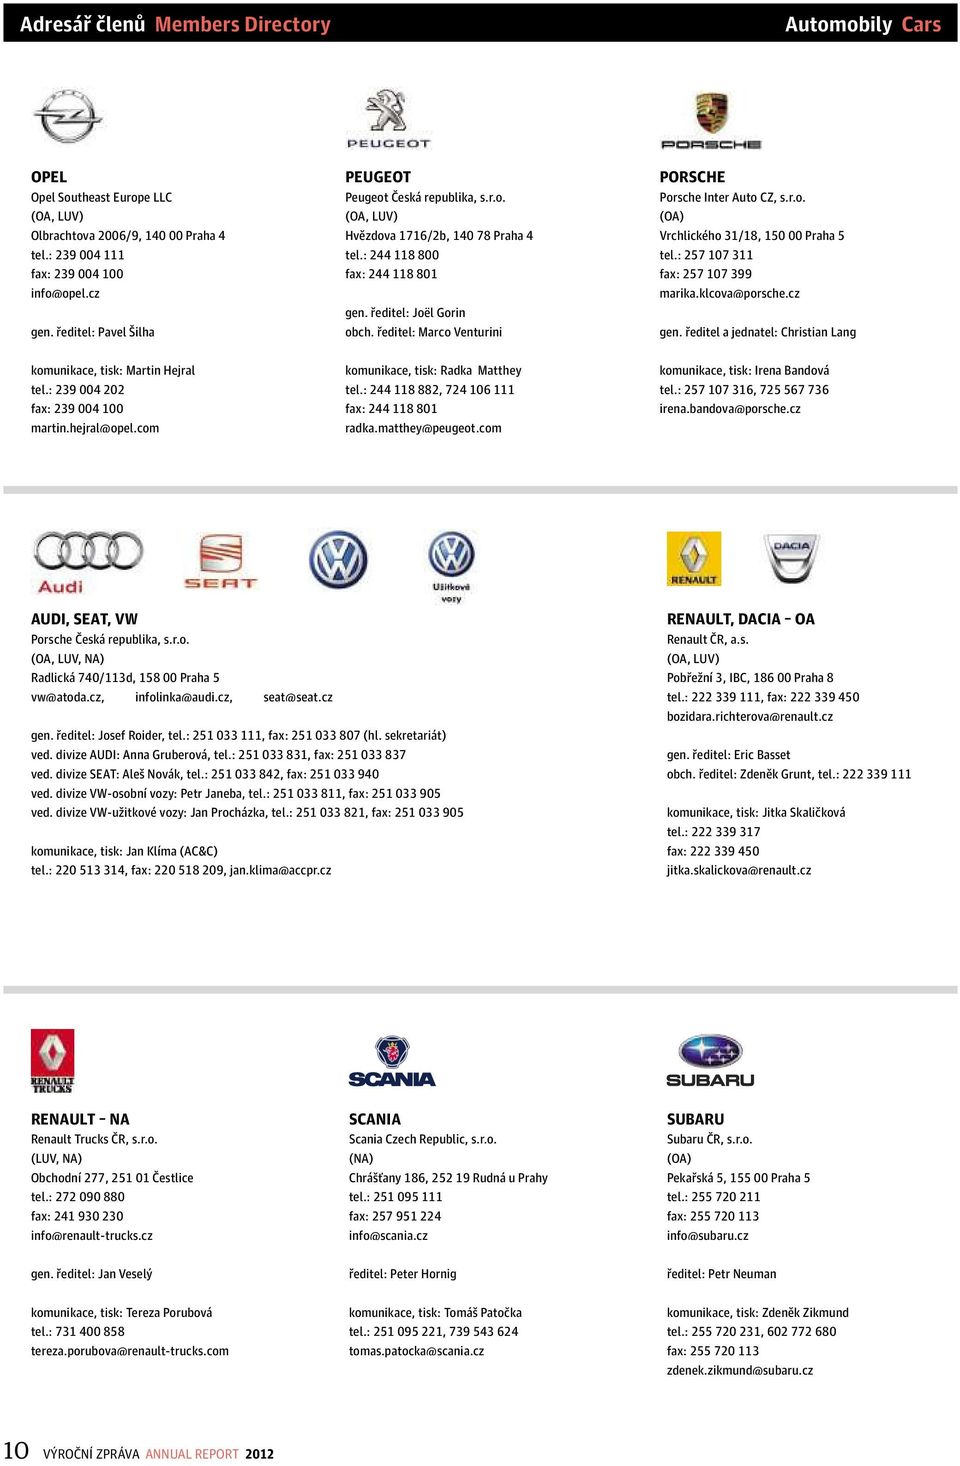 ředitel: Marco Venturini PORSCHE Porsche Inter Auto CZ, s.r.o. (OA) Vrchlického 31/18, 150 00 Praha 5 tel.: 257 107 311 fax: 257 107 399 marika.klcova@porsche.cz gen.